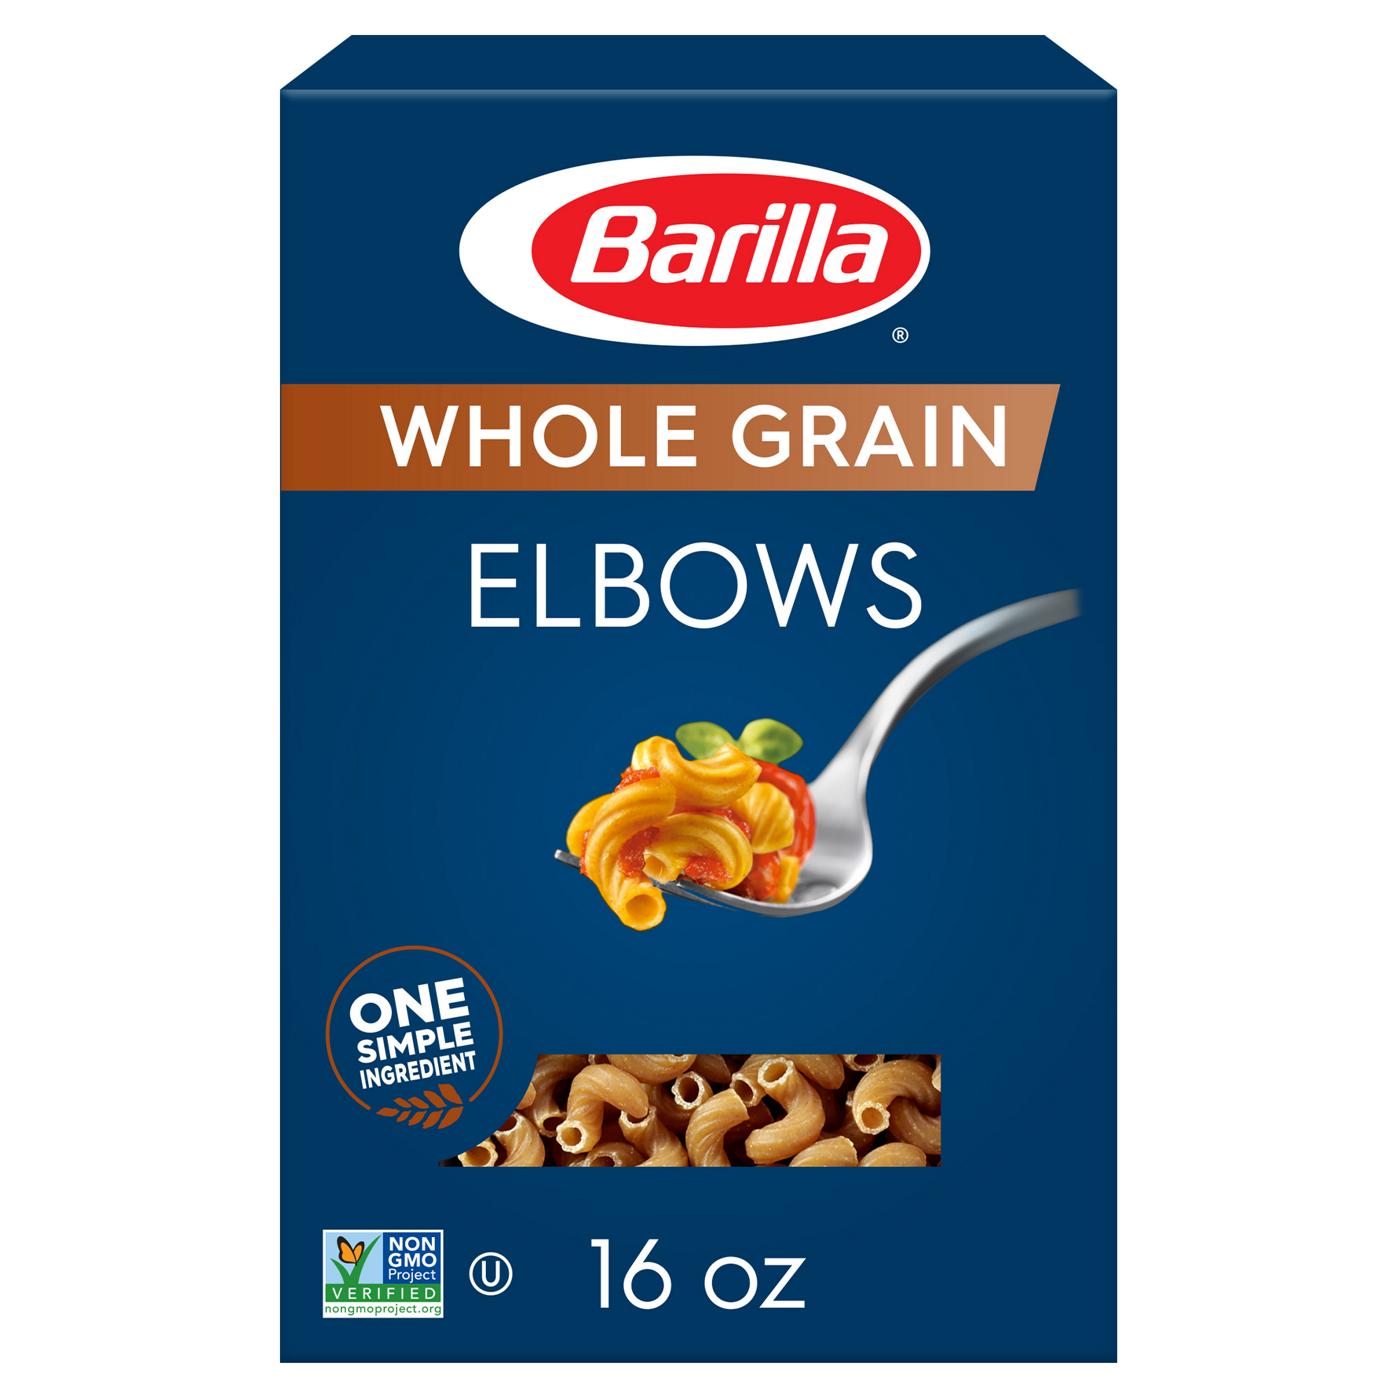 Barilla Whole Grain Elbows Pasta; image 1 of 6